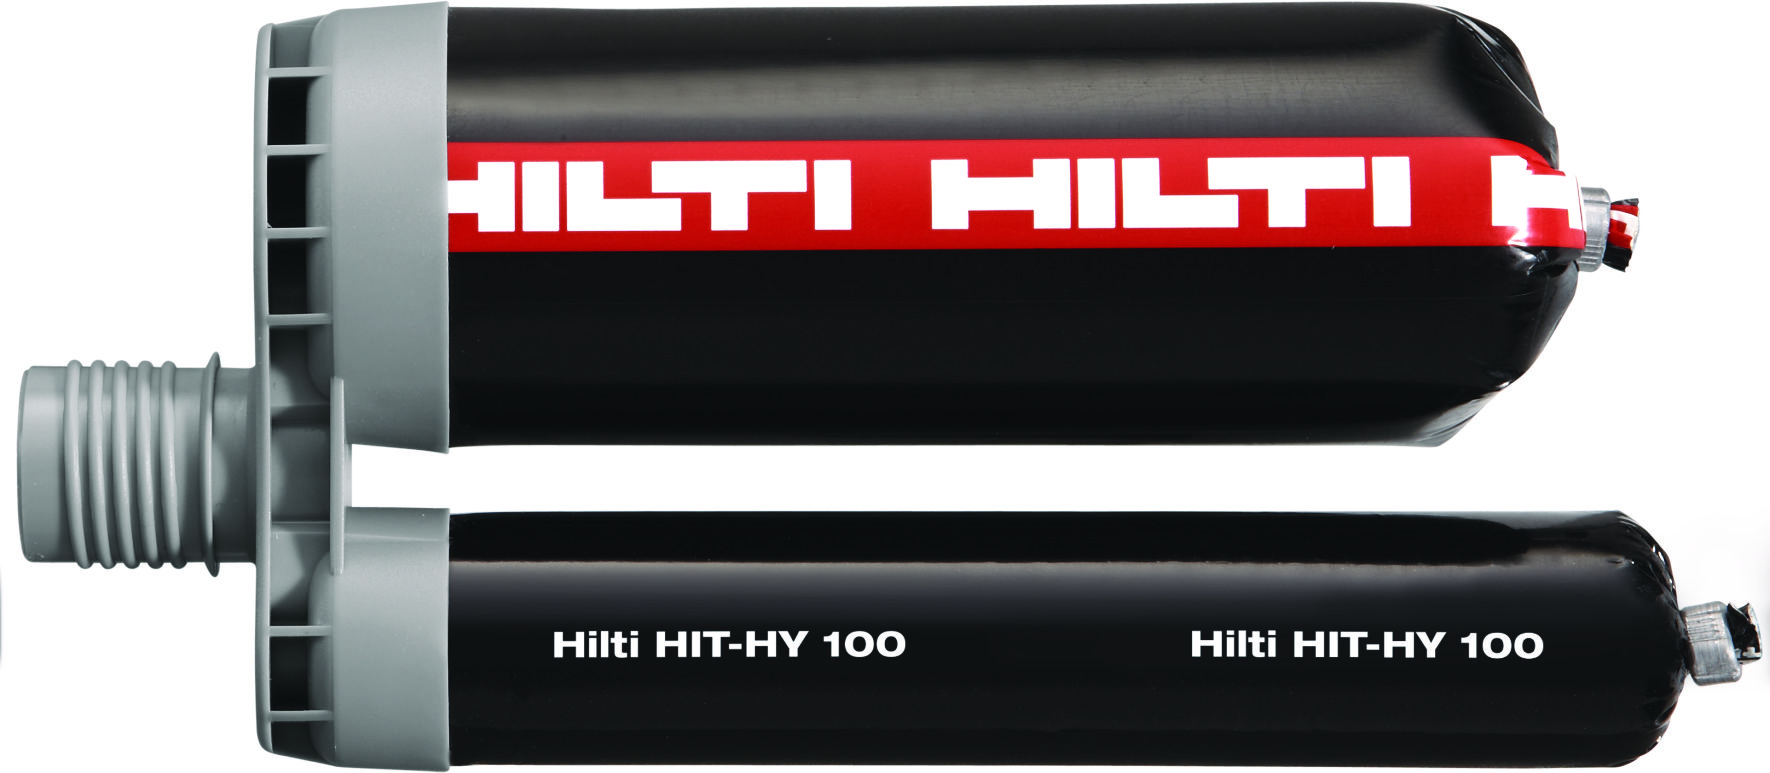 Hilti HIT-HY 100